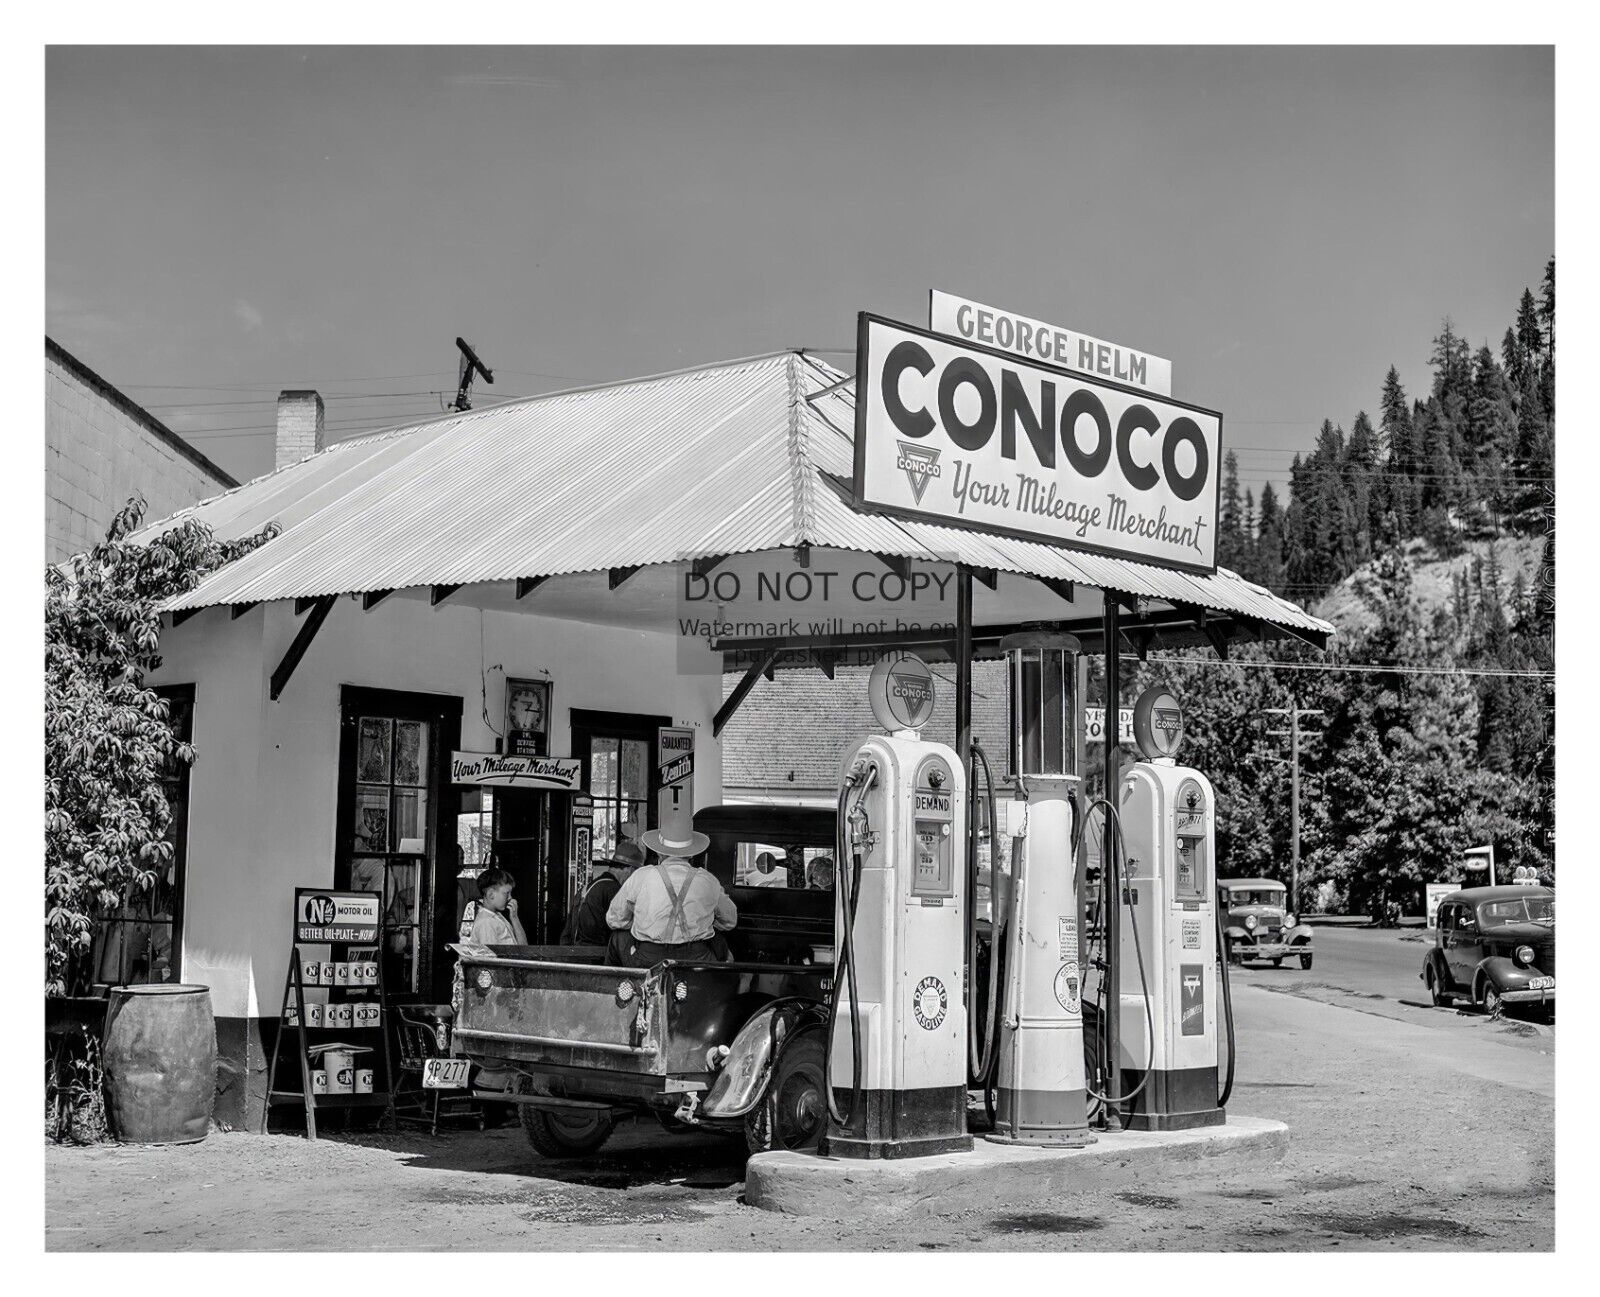 CONOCO GAS STATION OLD TRUCK OLD TRUCK 1941 OROFINO IDAHO 8X10 PHOTO